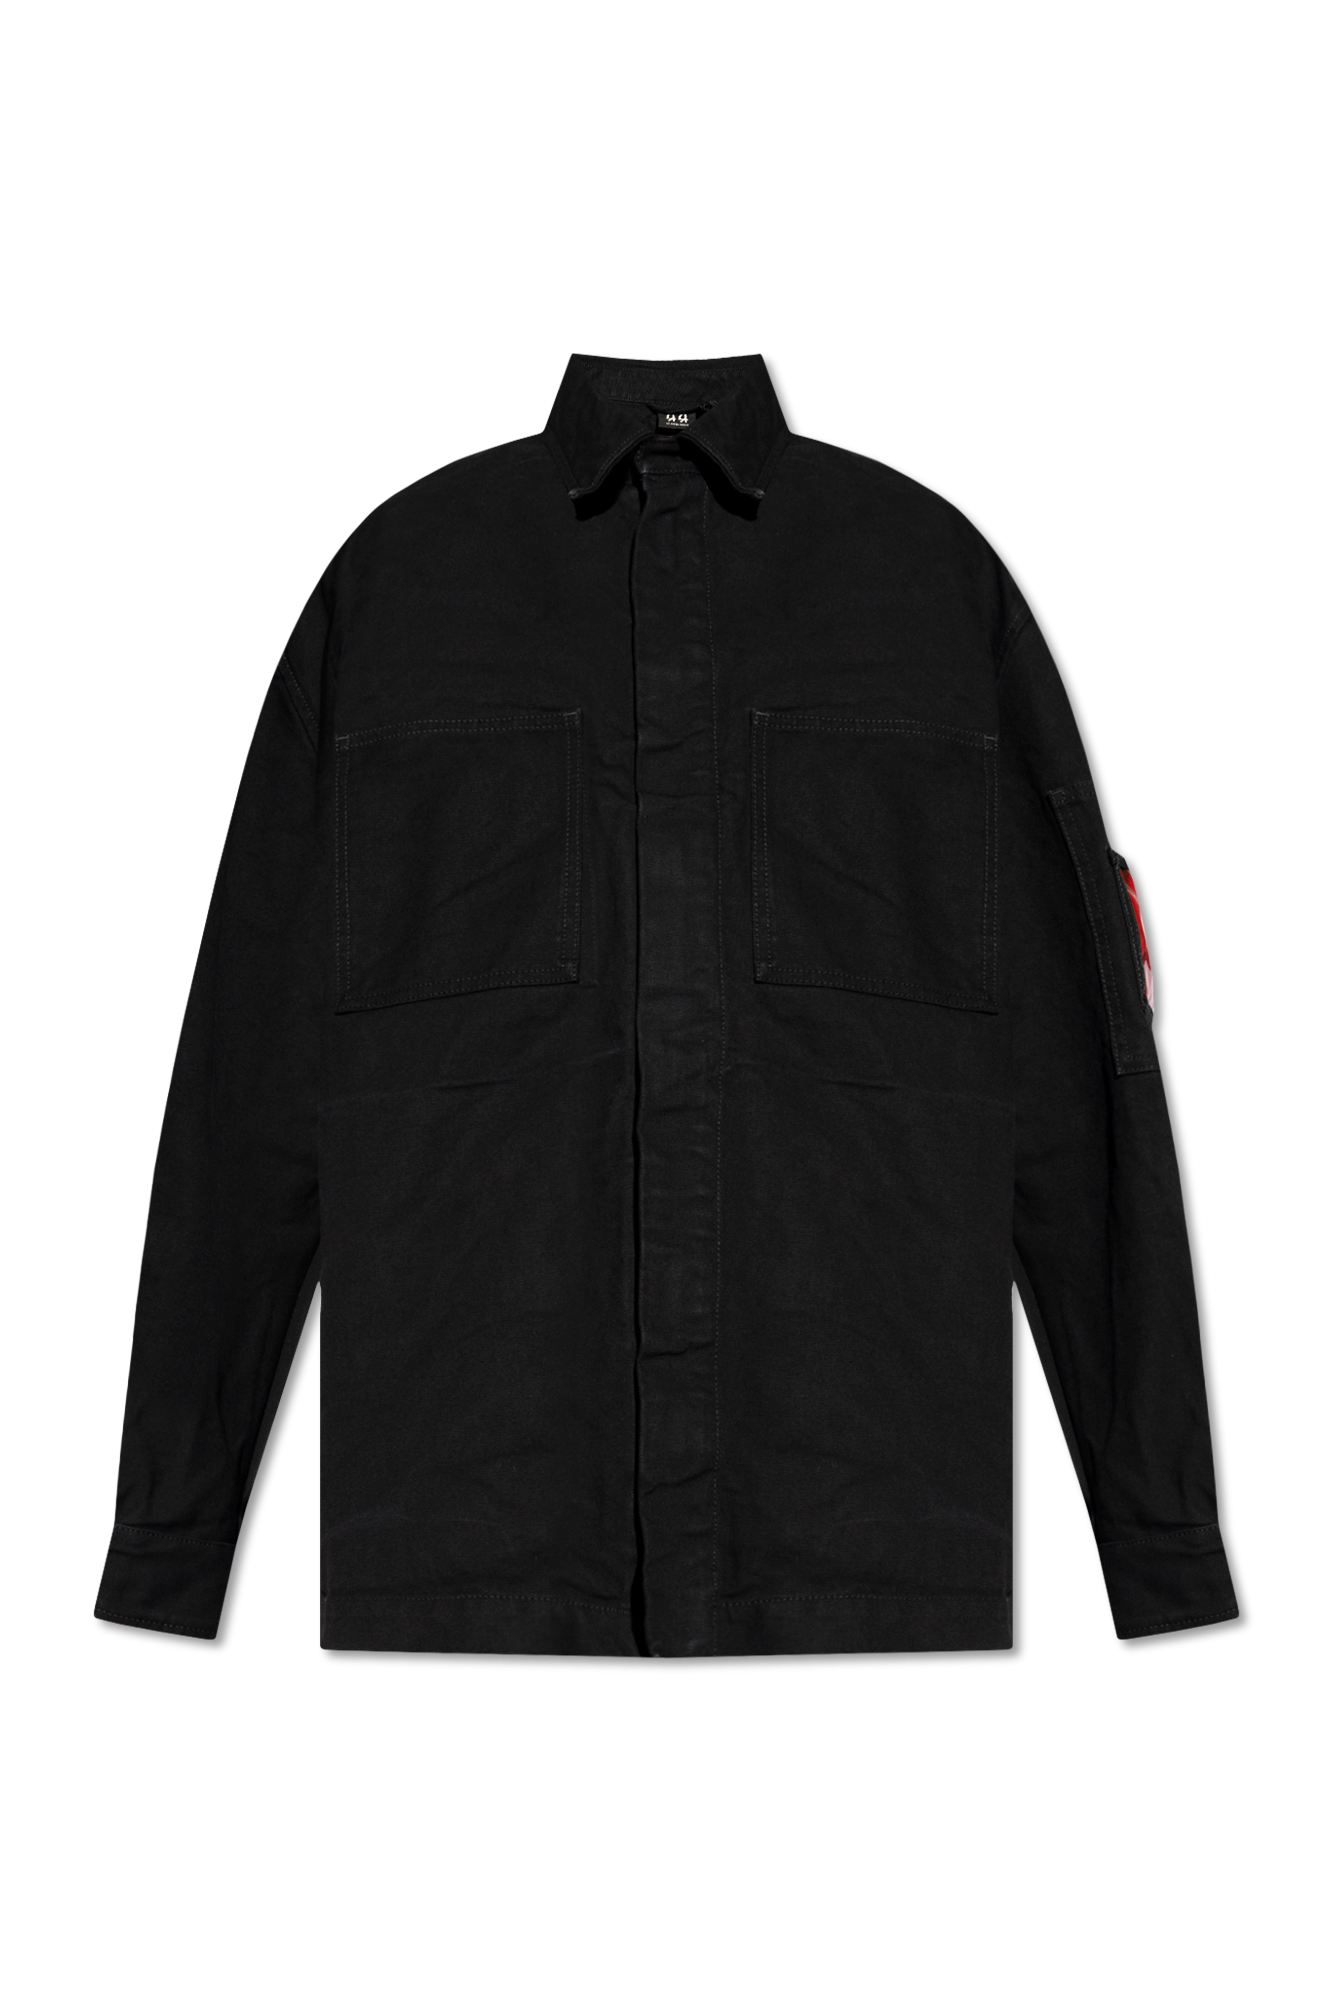 Black Denim jacket with logo 44 Label Group - One Star-logo short